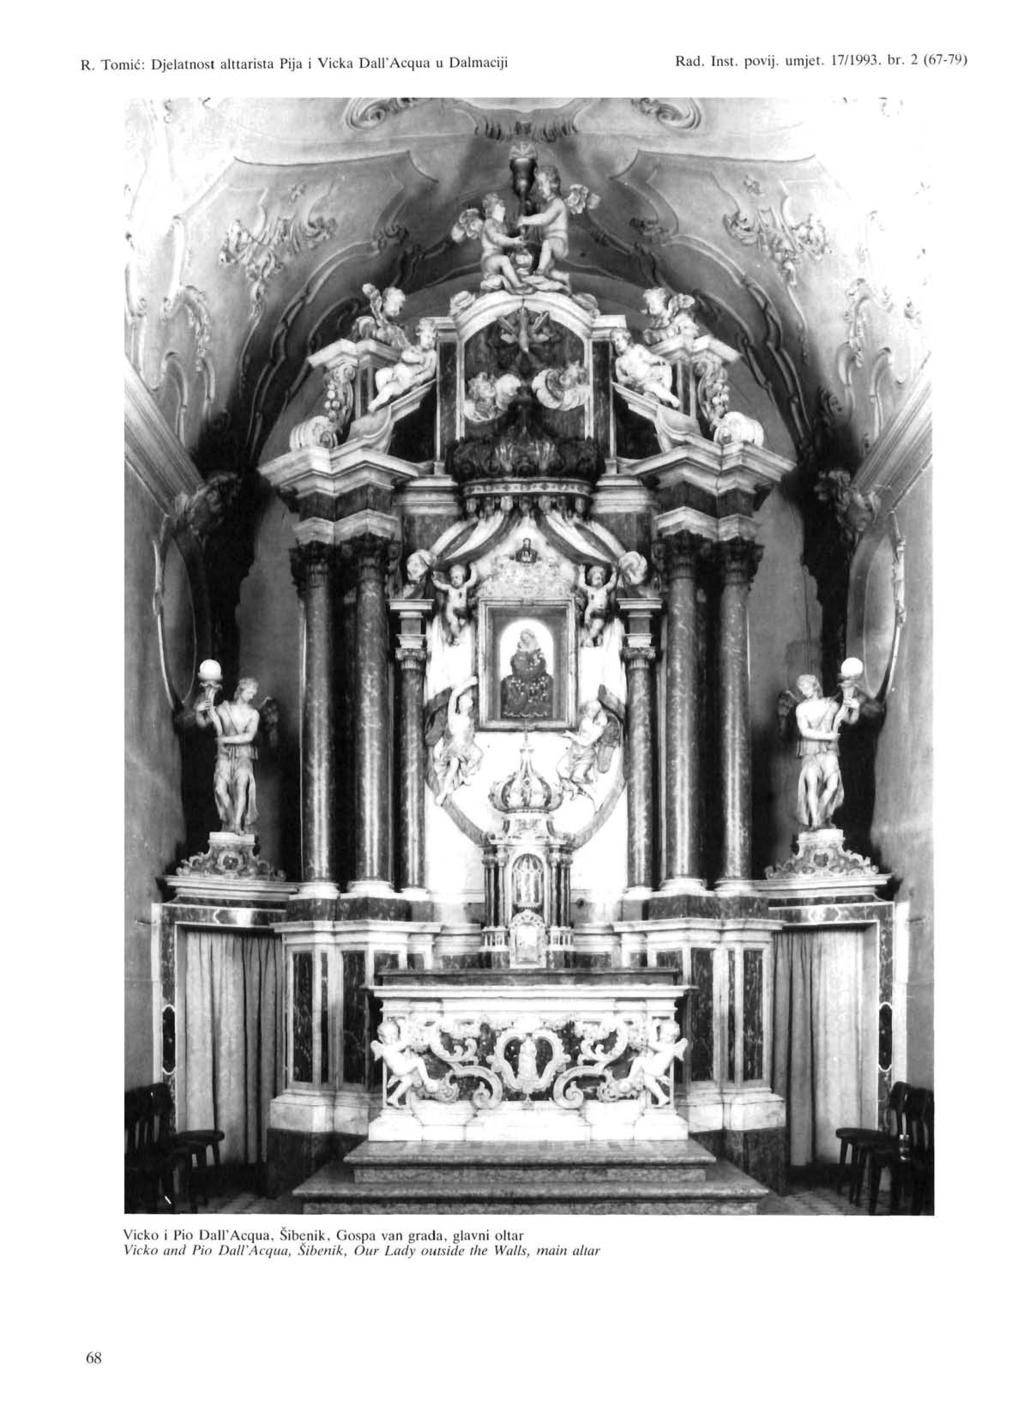 Vicko i Pio Dall'Acqua, Šibenik, Gospa van grada, glavni oltar